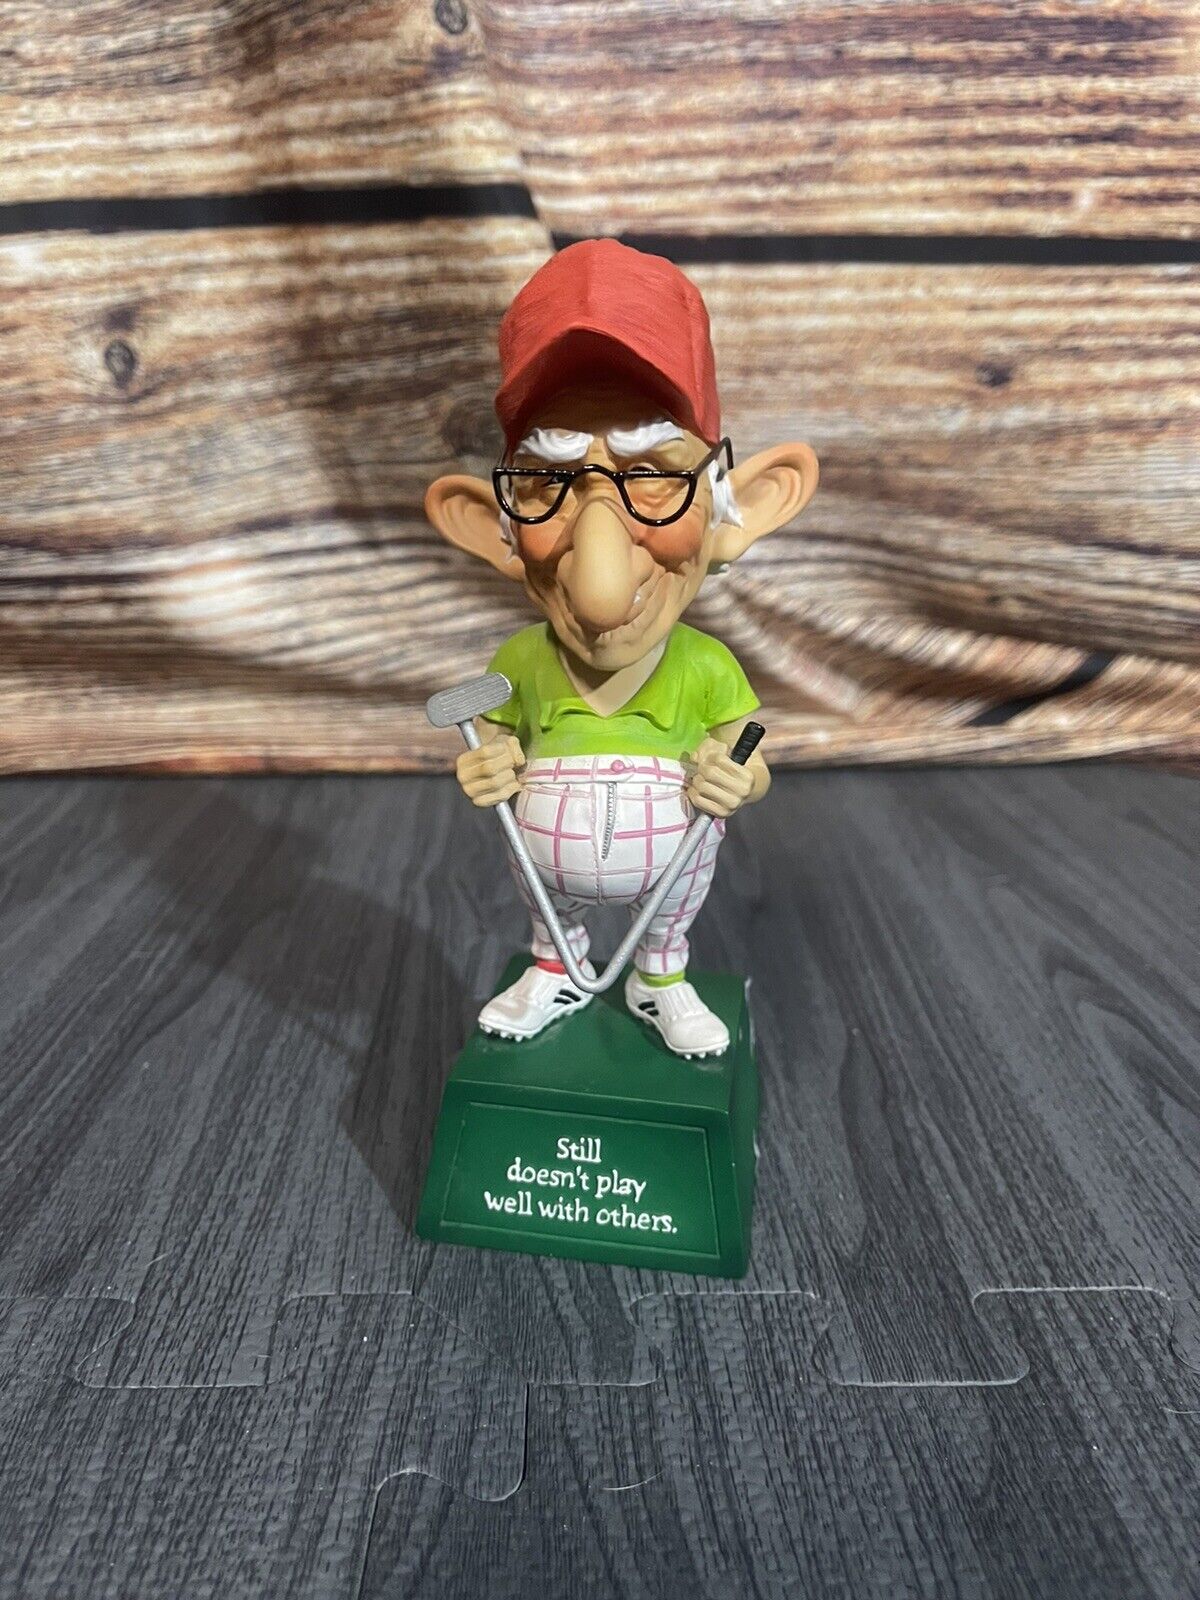 Coots 2005 Figurine Bobble Head “Golfer” Item # 4966